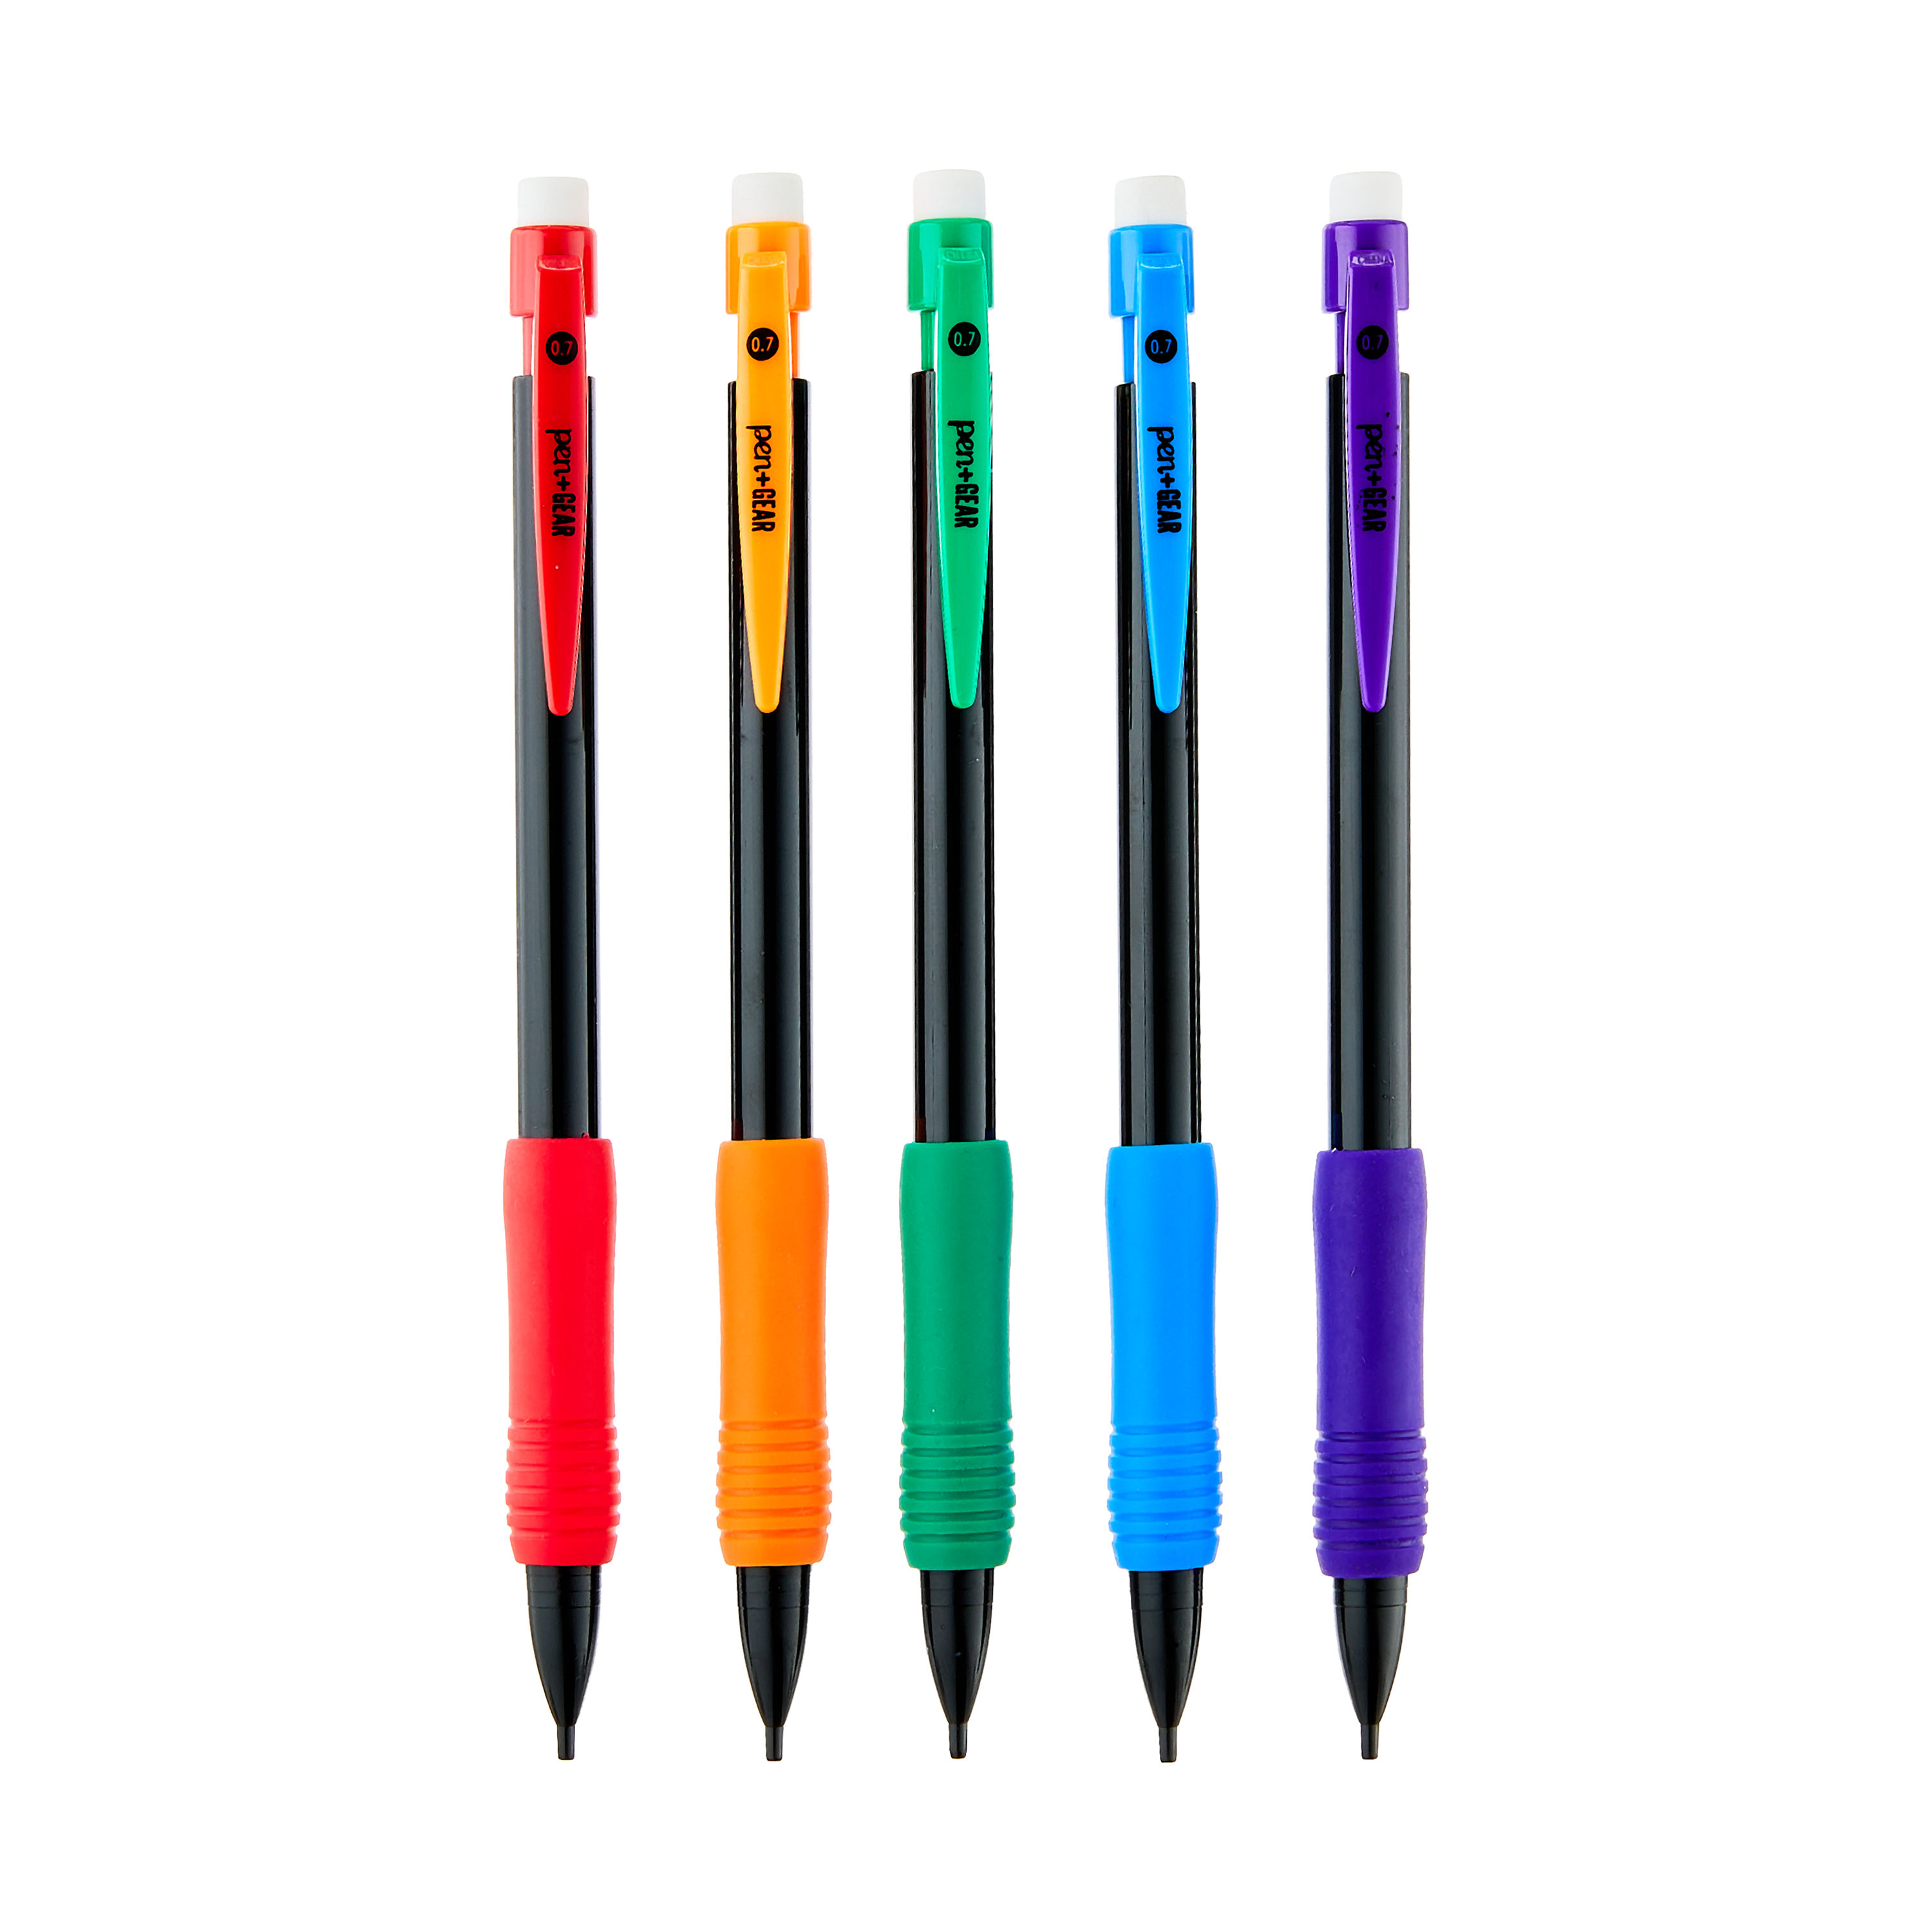 Pen+Gear No.2 Mechanical Pencils, 0.7mm, 5 Pack - image 4 of 8